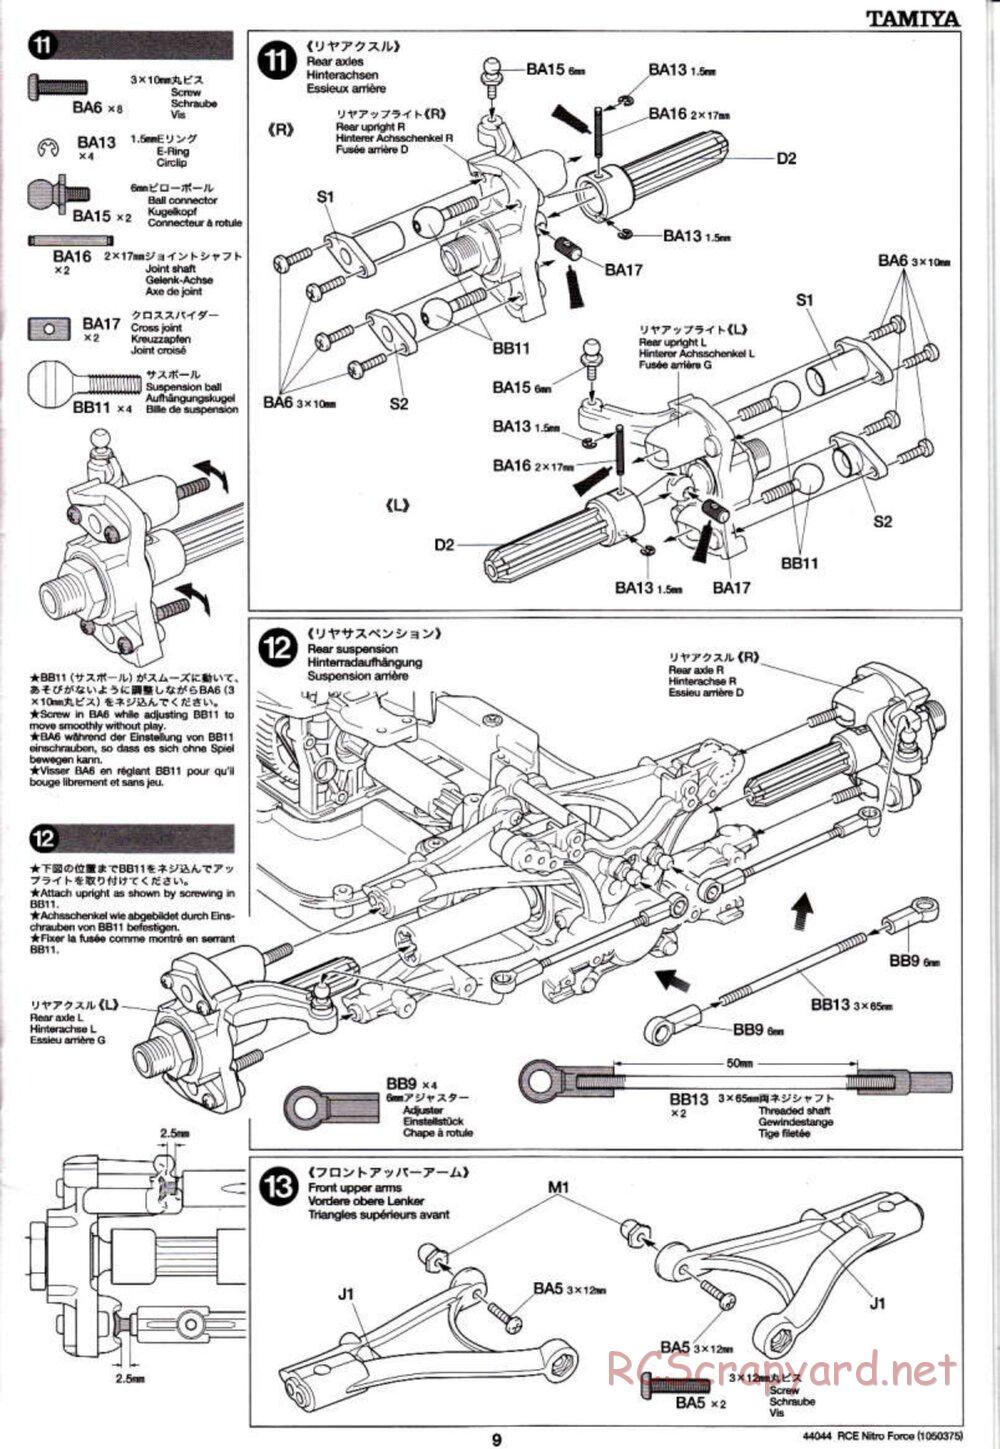 Tamiya - Nitro Force - NDF-01 Chassis - Manual - Page 9